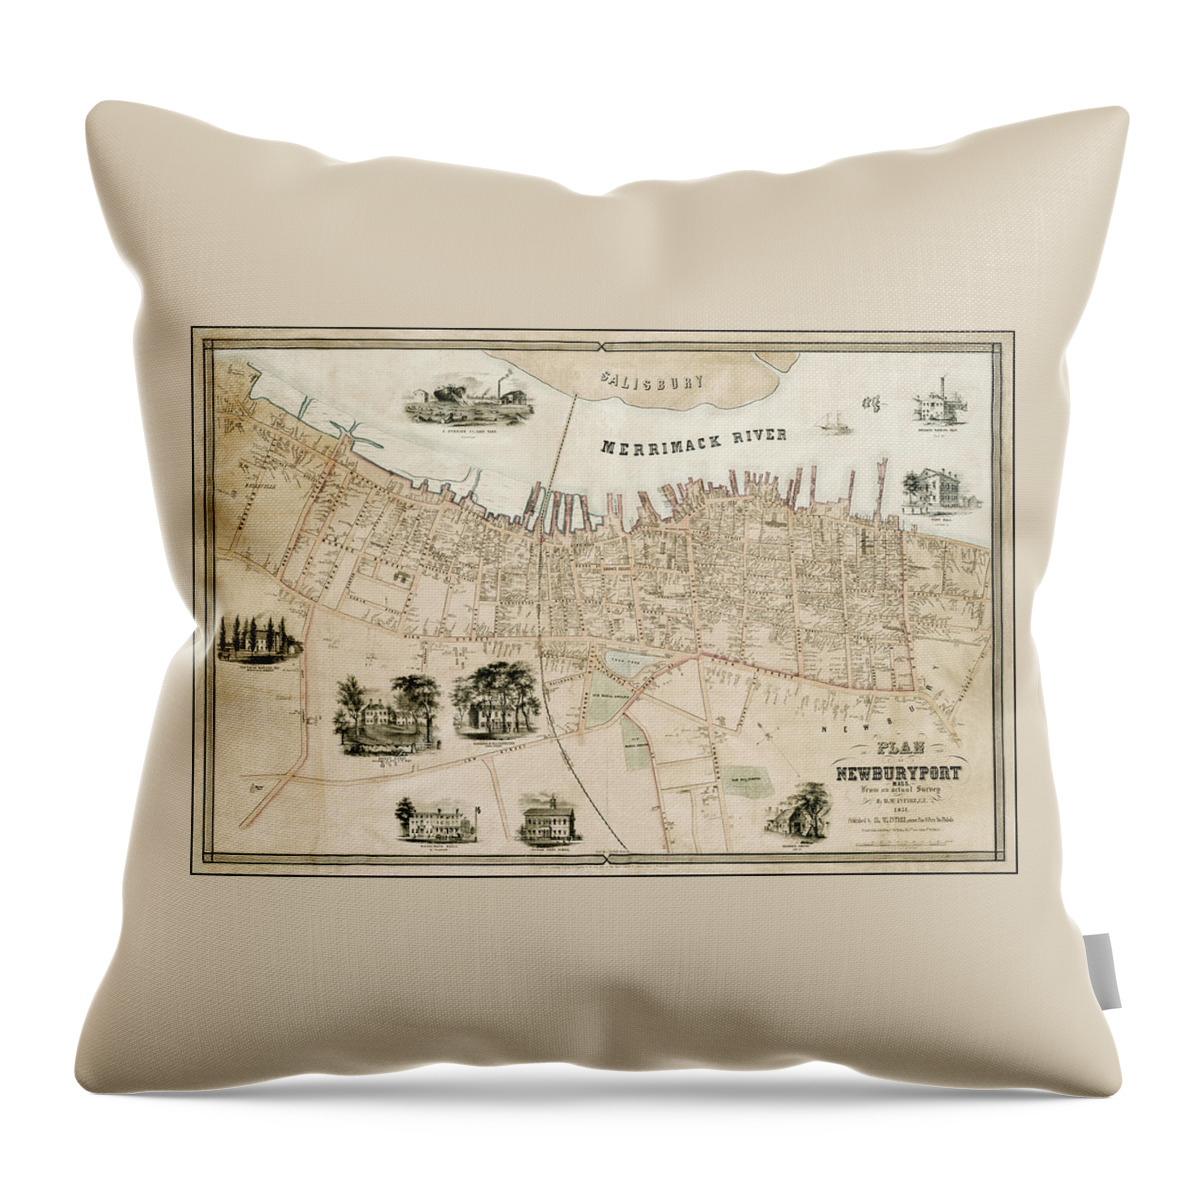 Newburyport Throw Pillow featuring the photograph Newburyport Massachusetts Vintage Map 1851 by Carol Japp